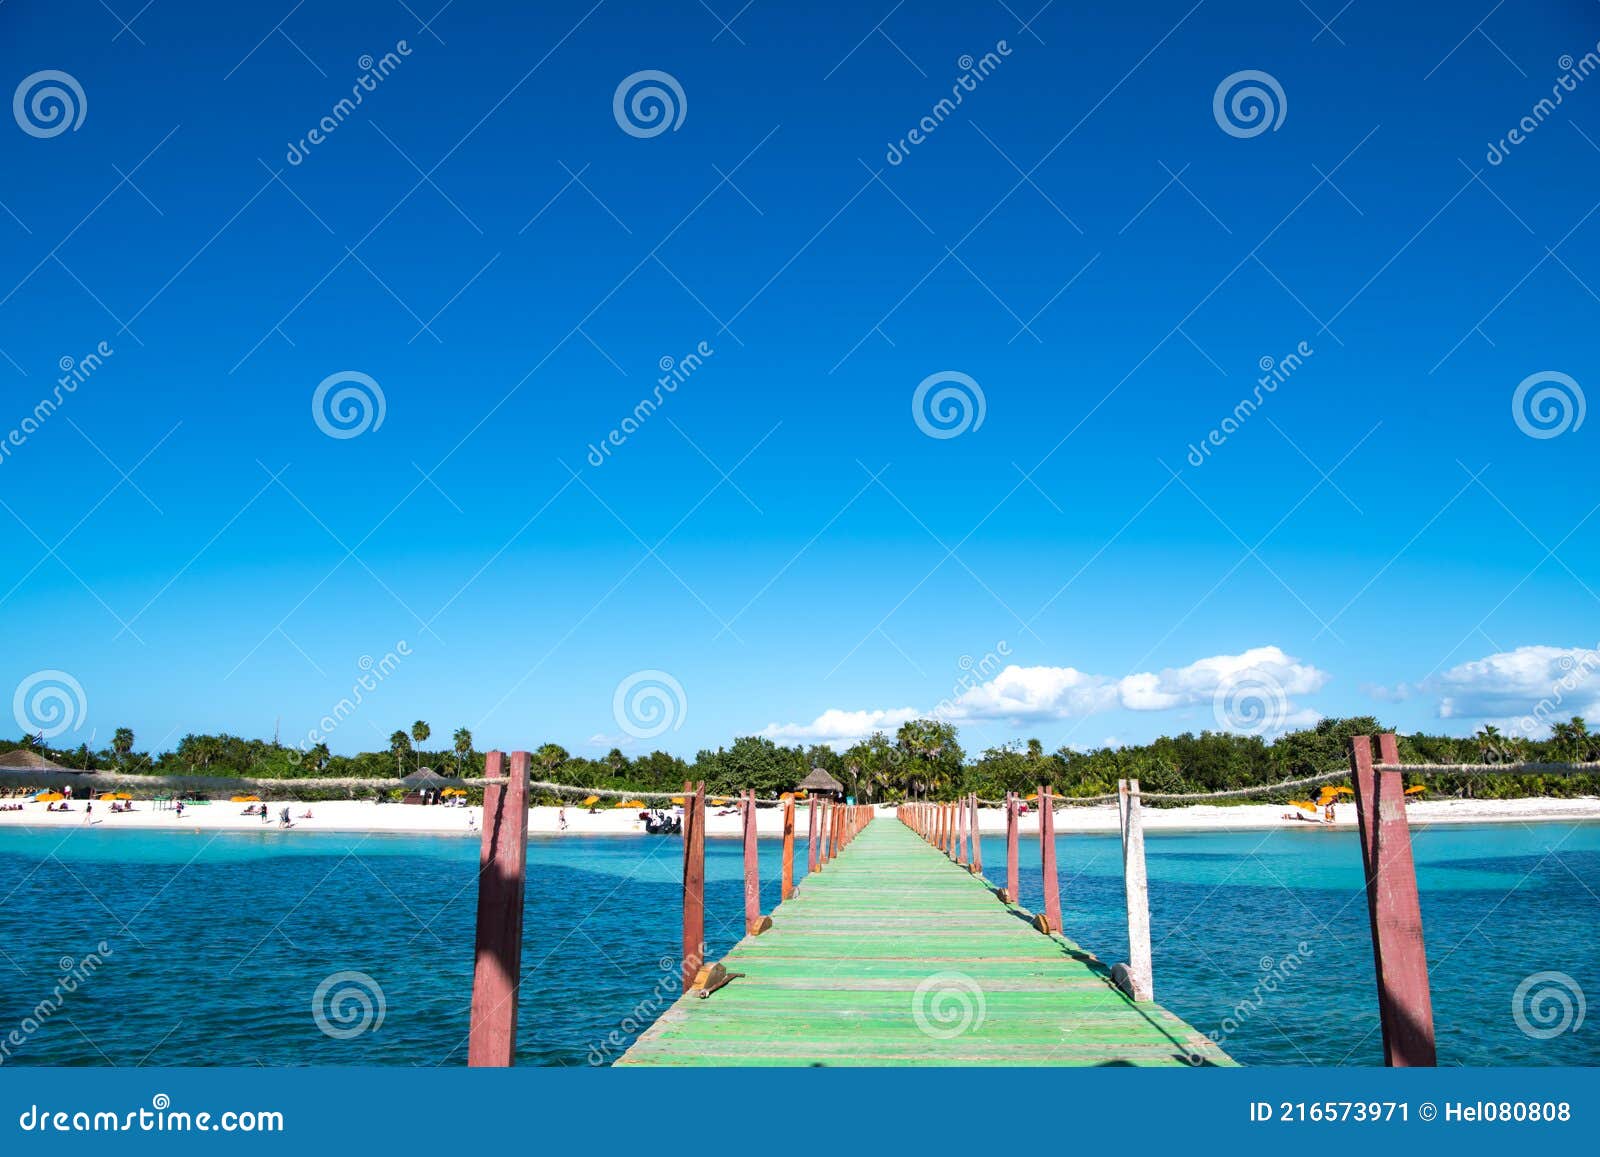 gangplank with green planks leading to beautiful beach of punta frances, isla de juvetud, cuba